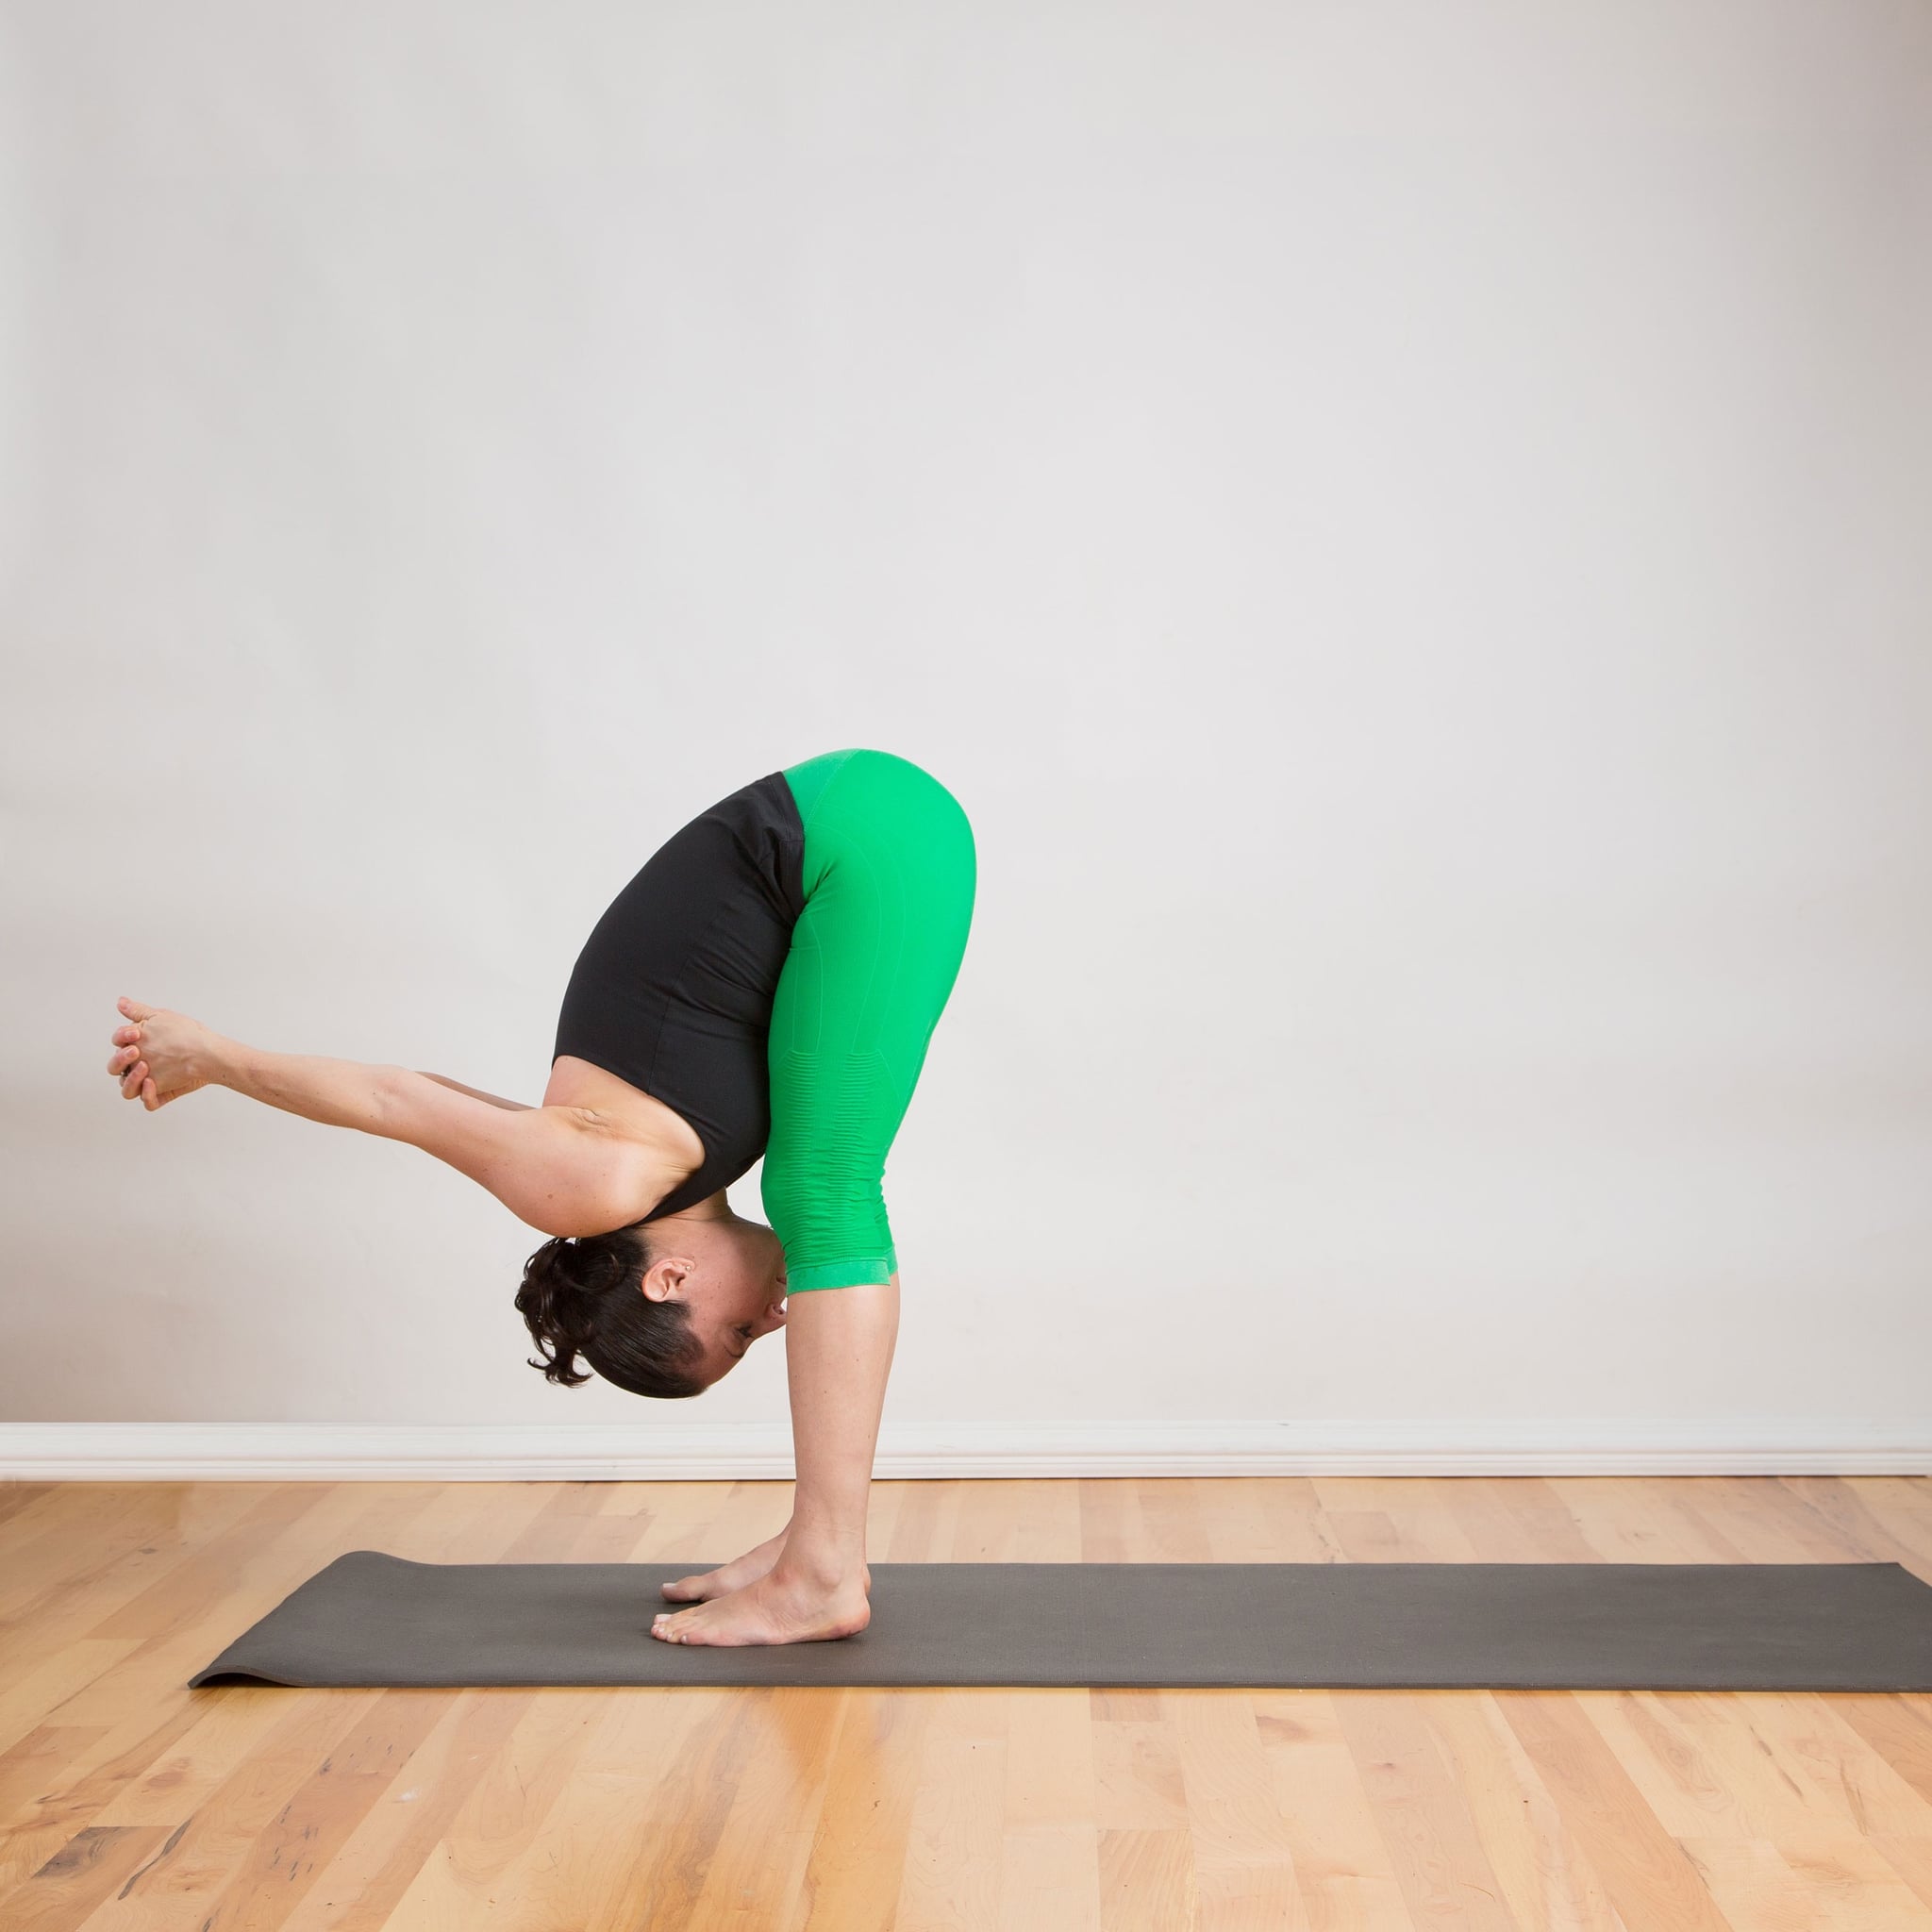 FULL BODY STRETCH & COOL DOWN | 6 minutes Yoga Work out | Post workout yoga,  Full body stretch, Daily stretches